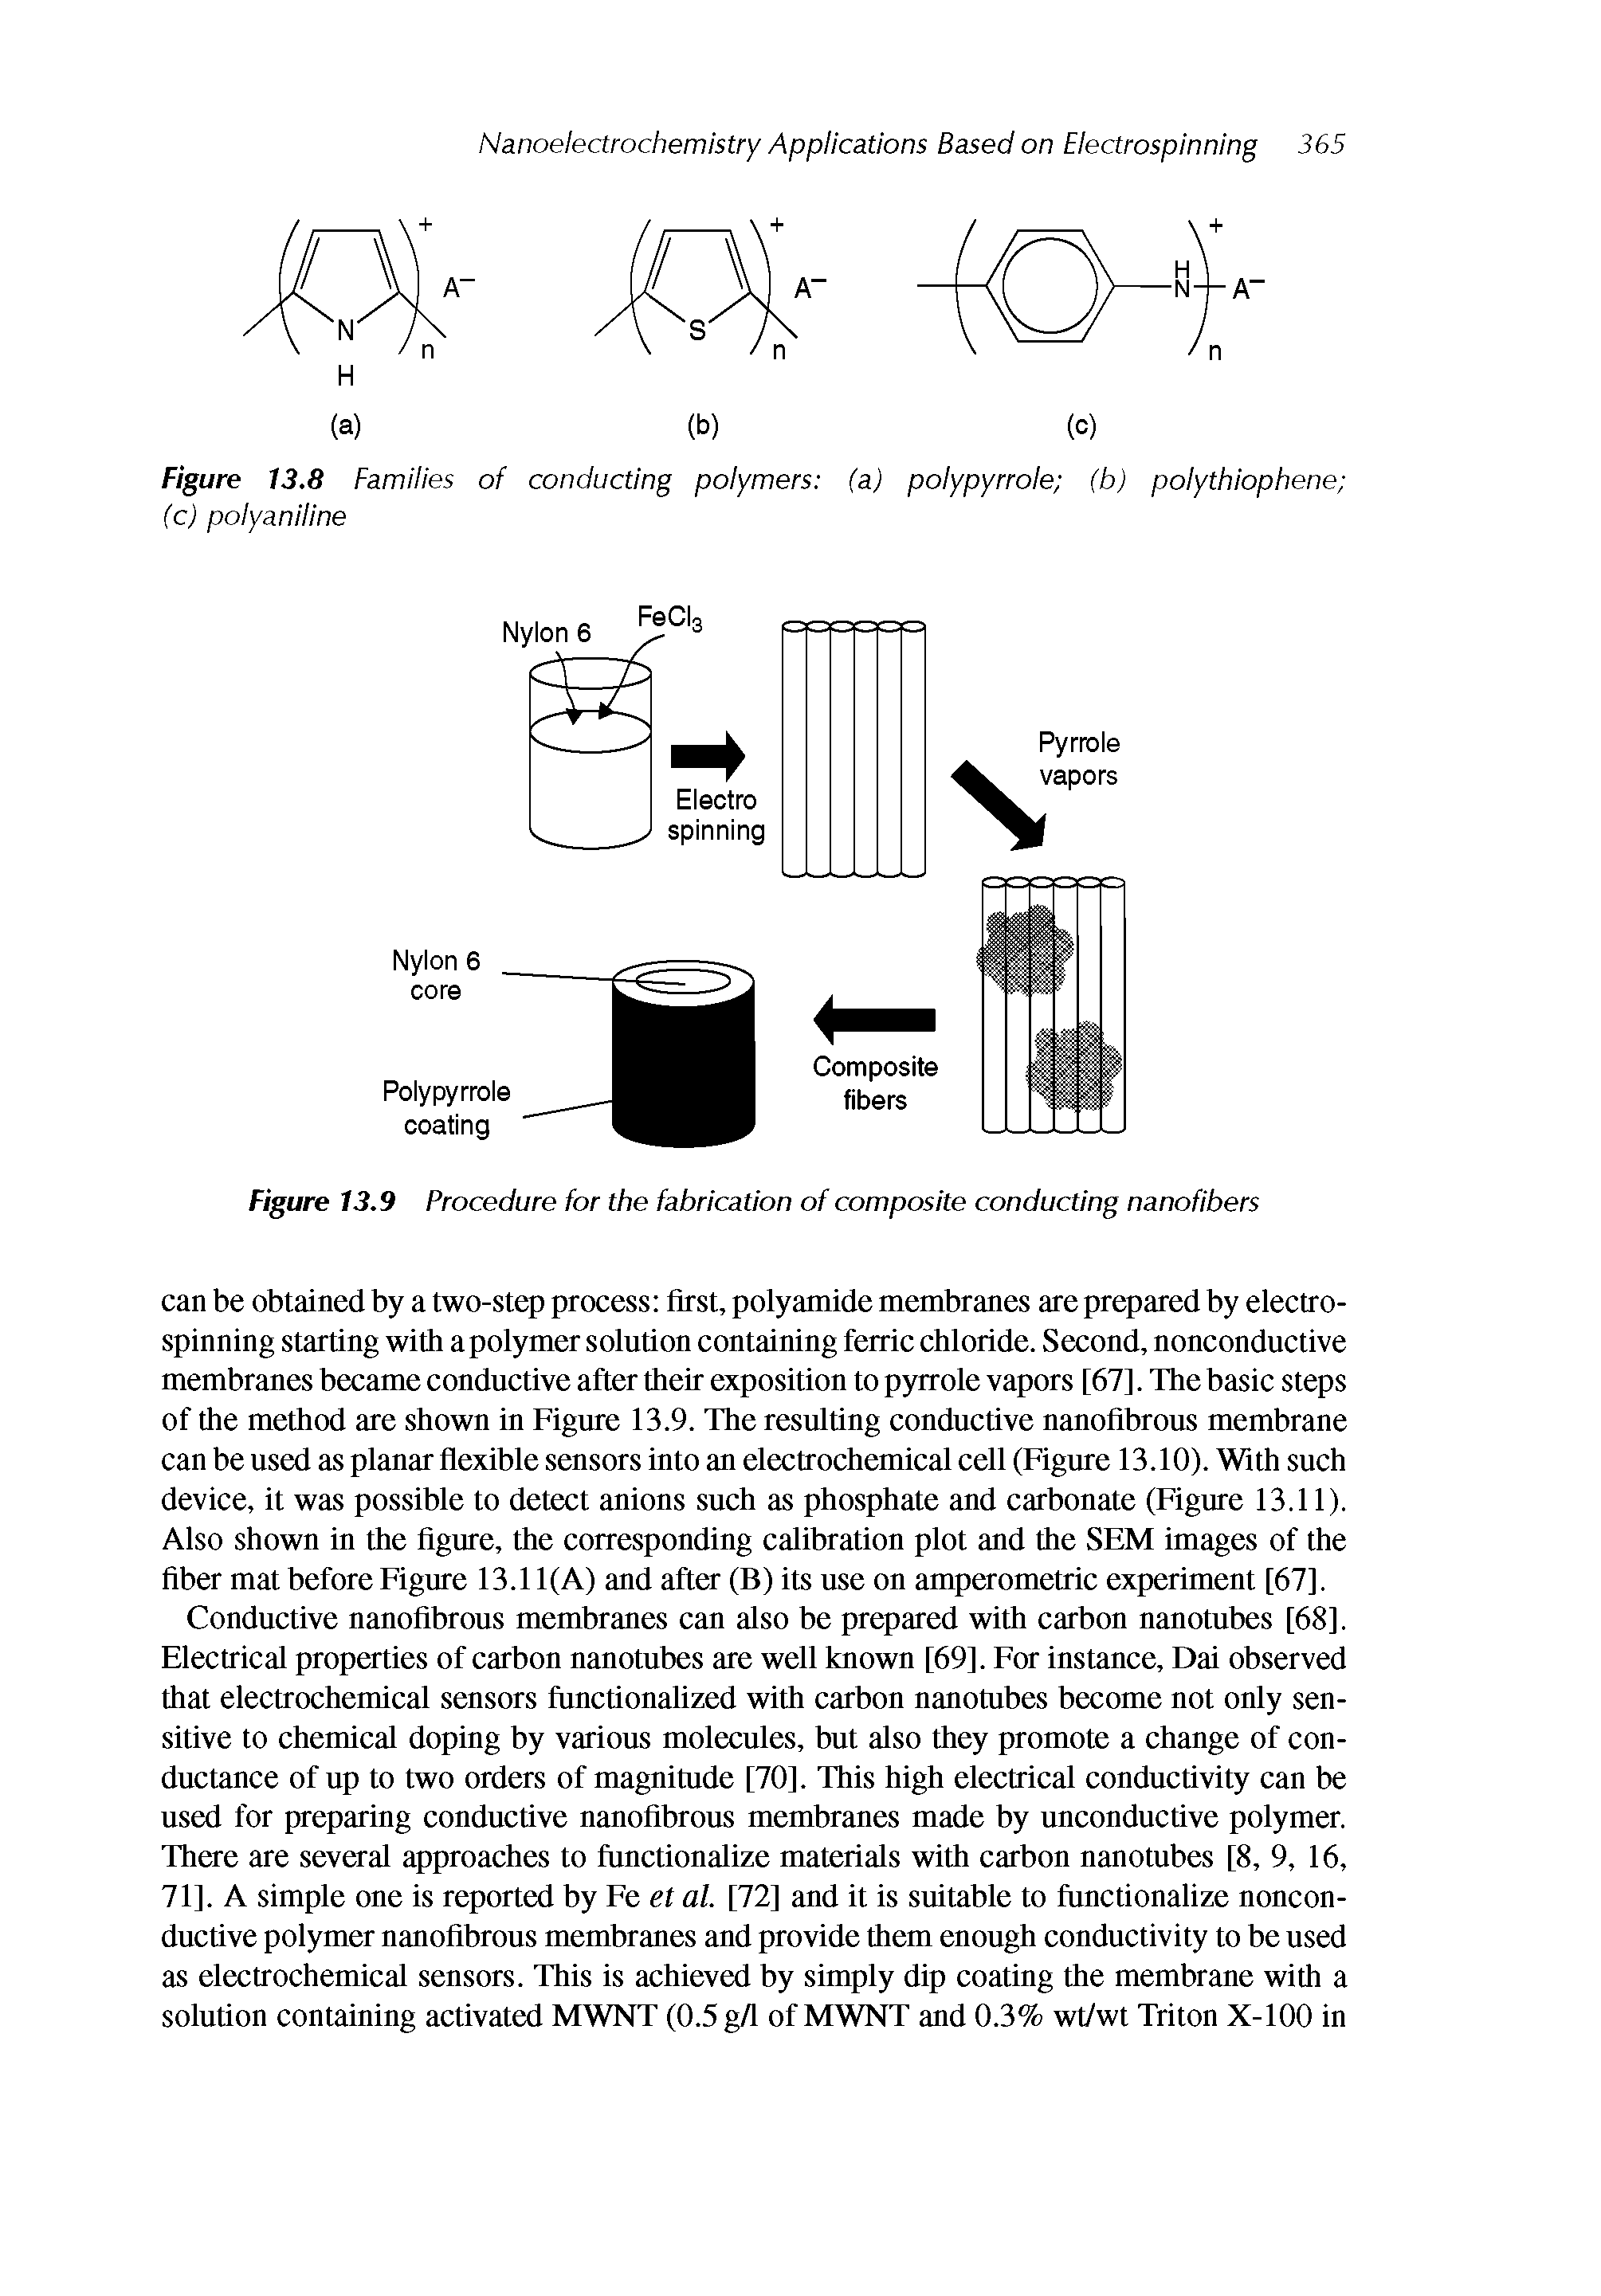 Figure 13.9 Procedure for the fabrication of composite conducting nanofibers...